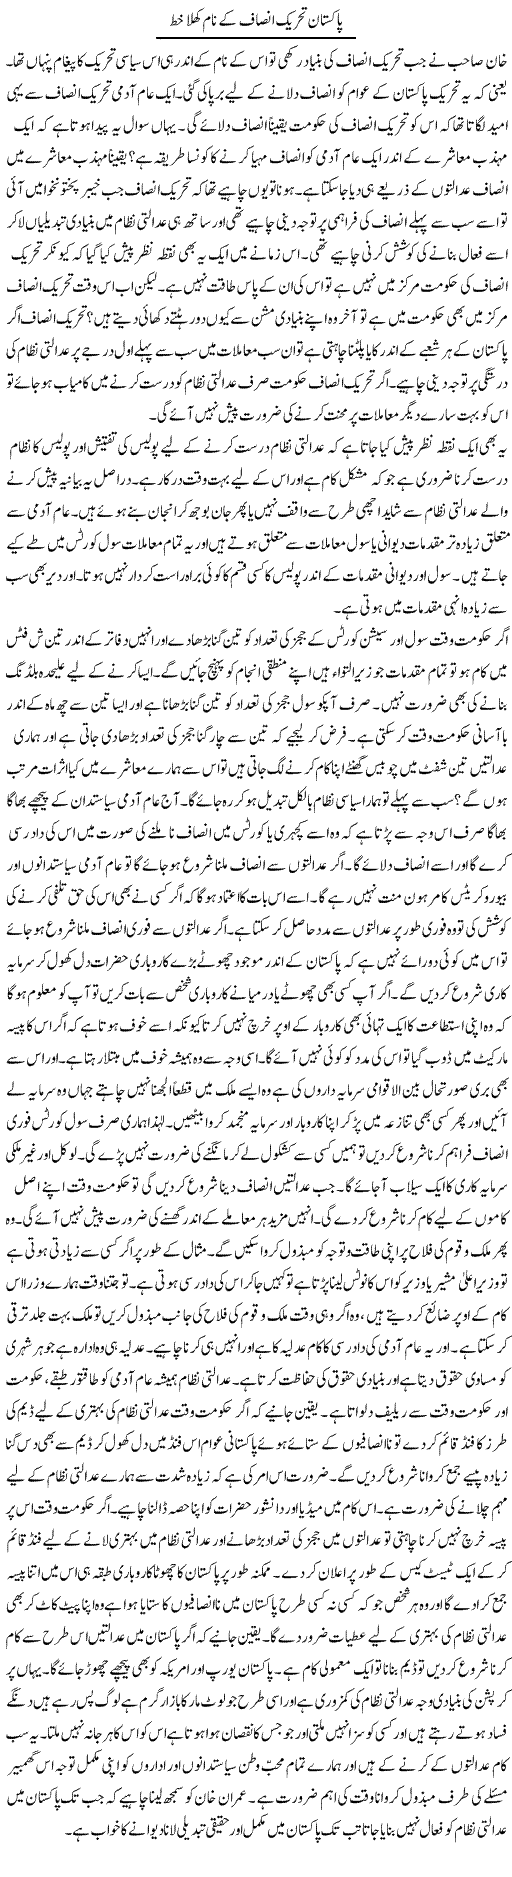 Pakistan Tehreek Insaf Ke Naam Khula Khat | Syed Zeeshan Haider | Daily Urdu Columns